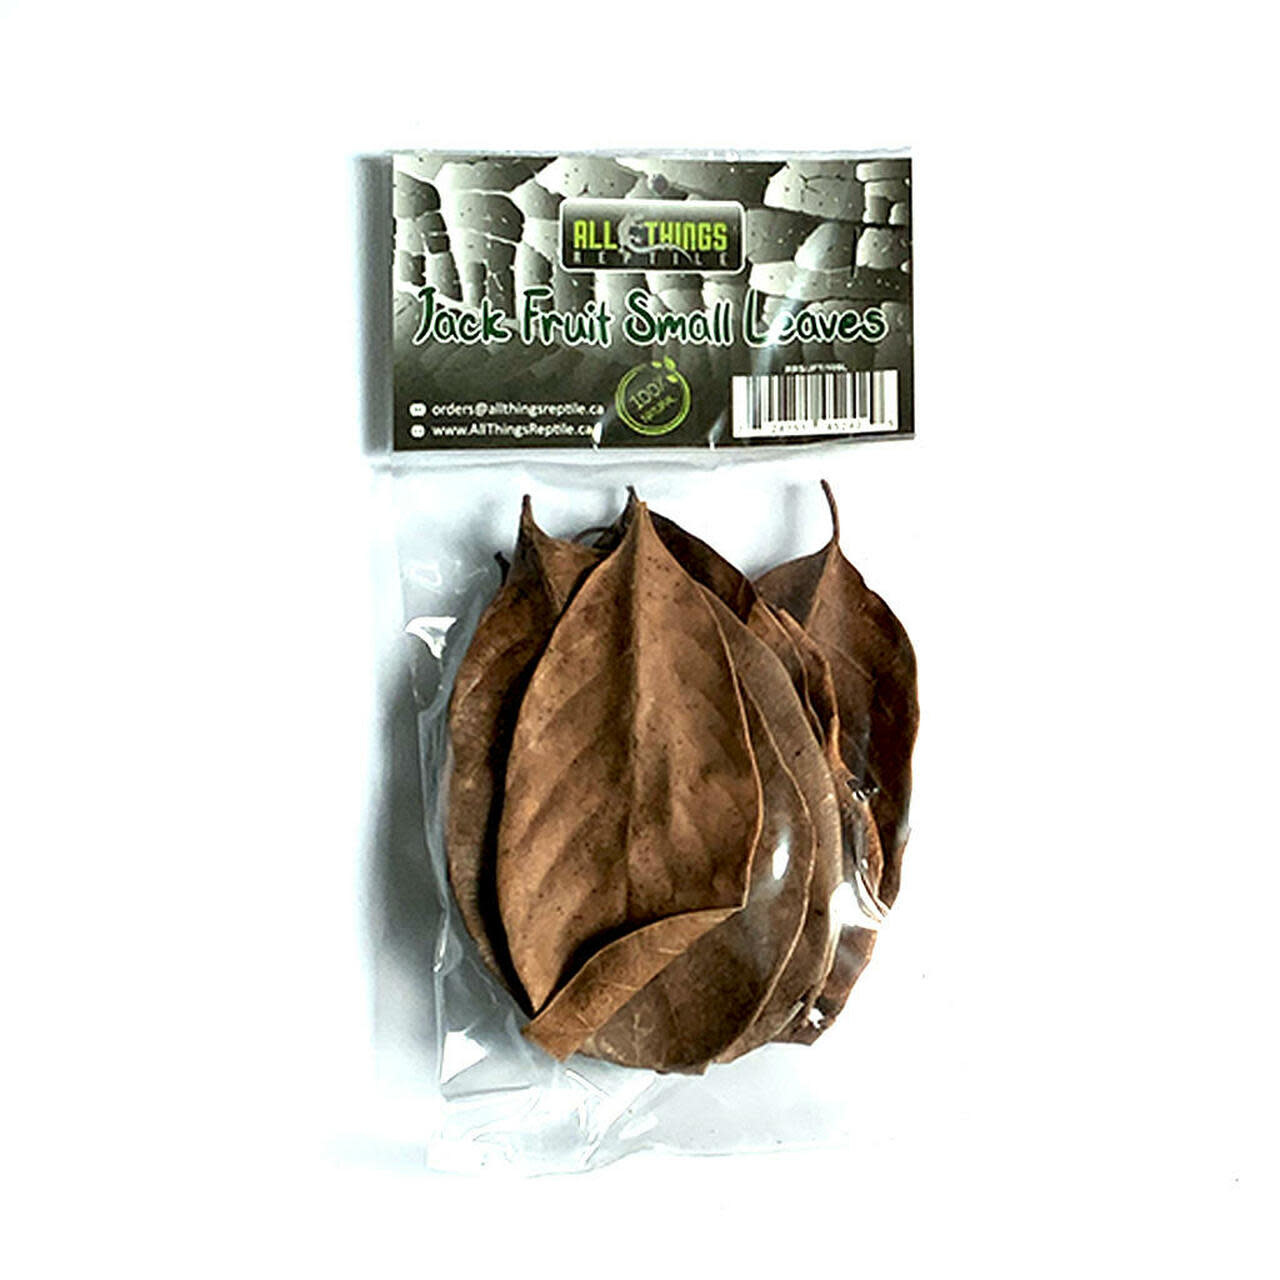 All things reptile Petites feuilles de Jacquier pq 10 - Jack fruit Small Leaves 10-pack